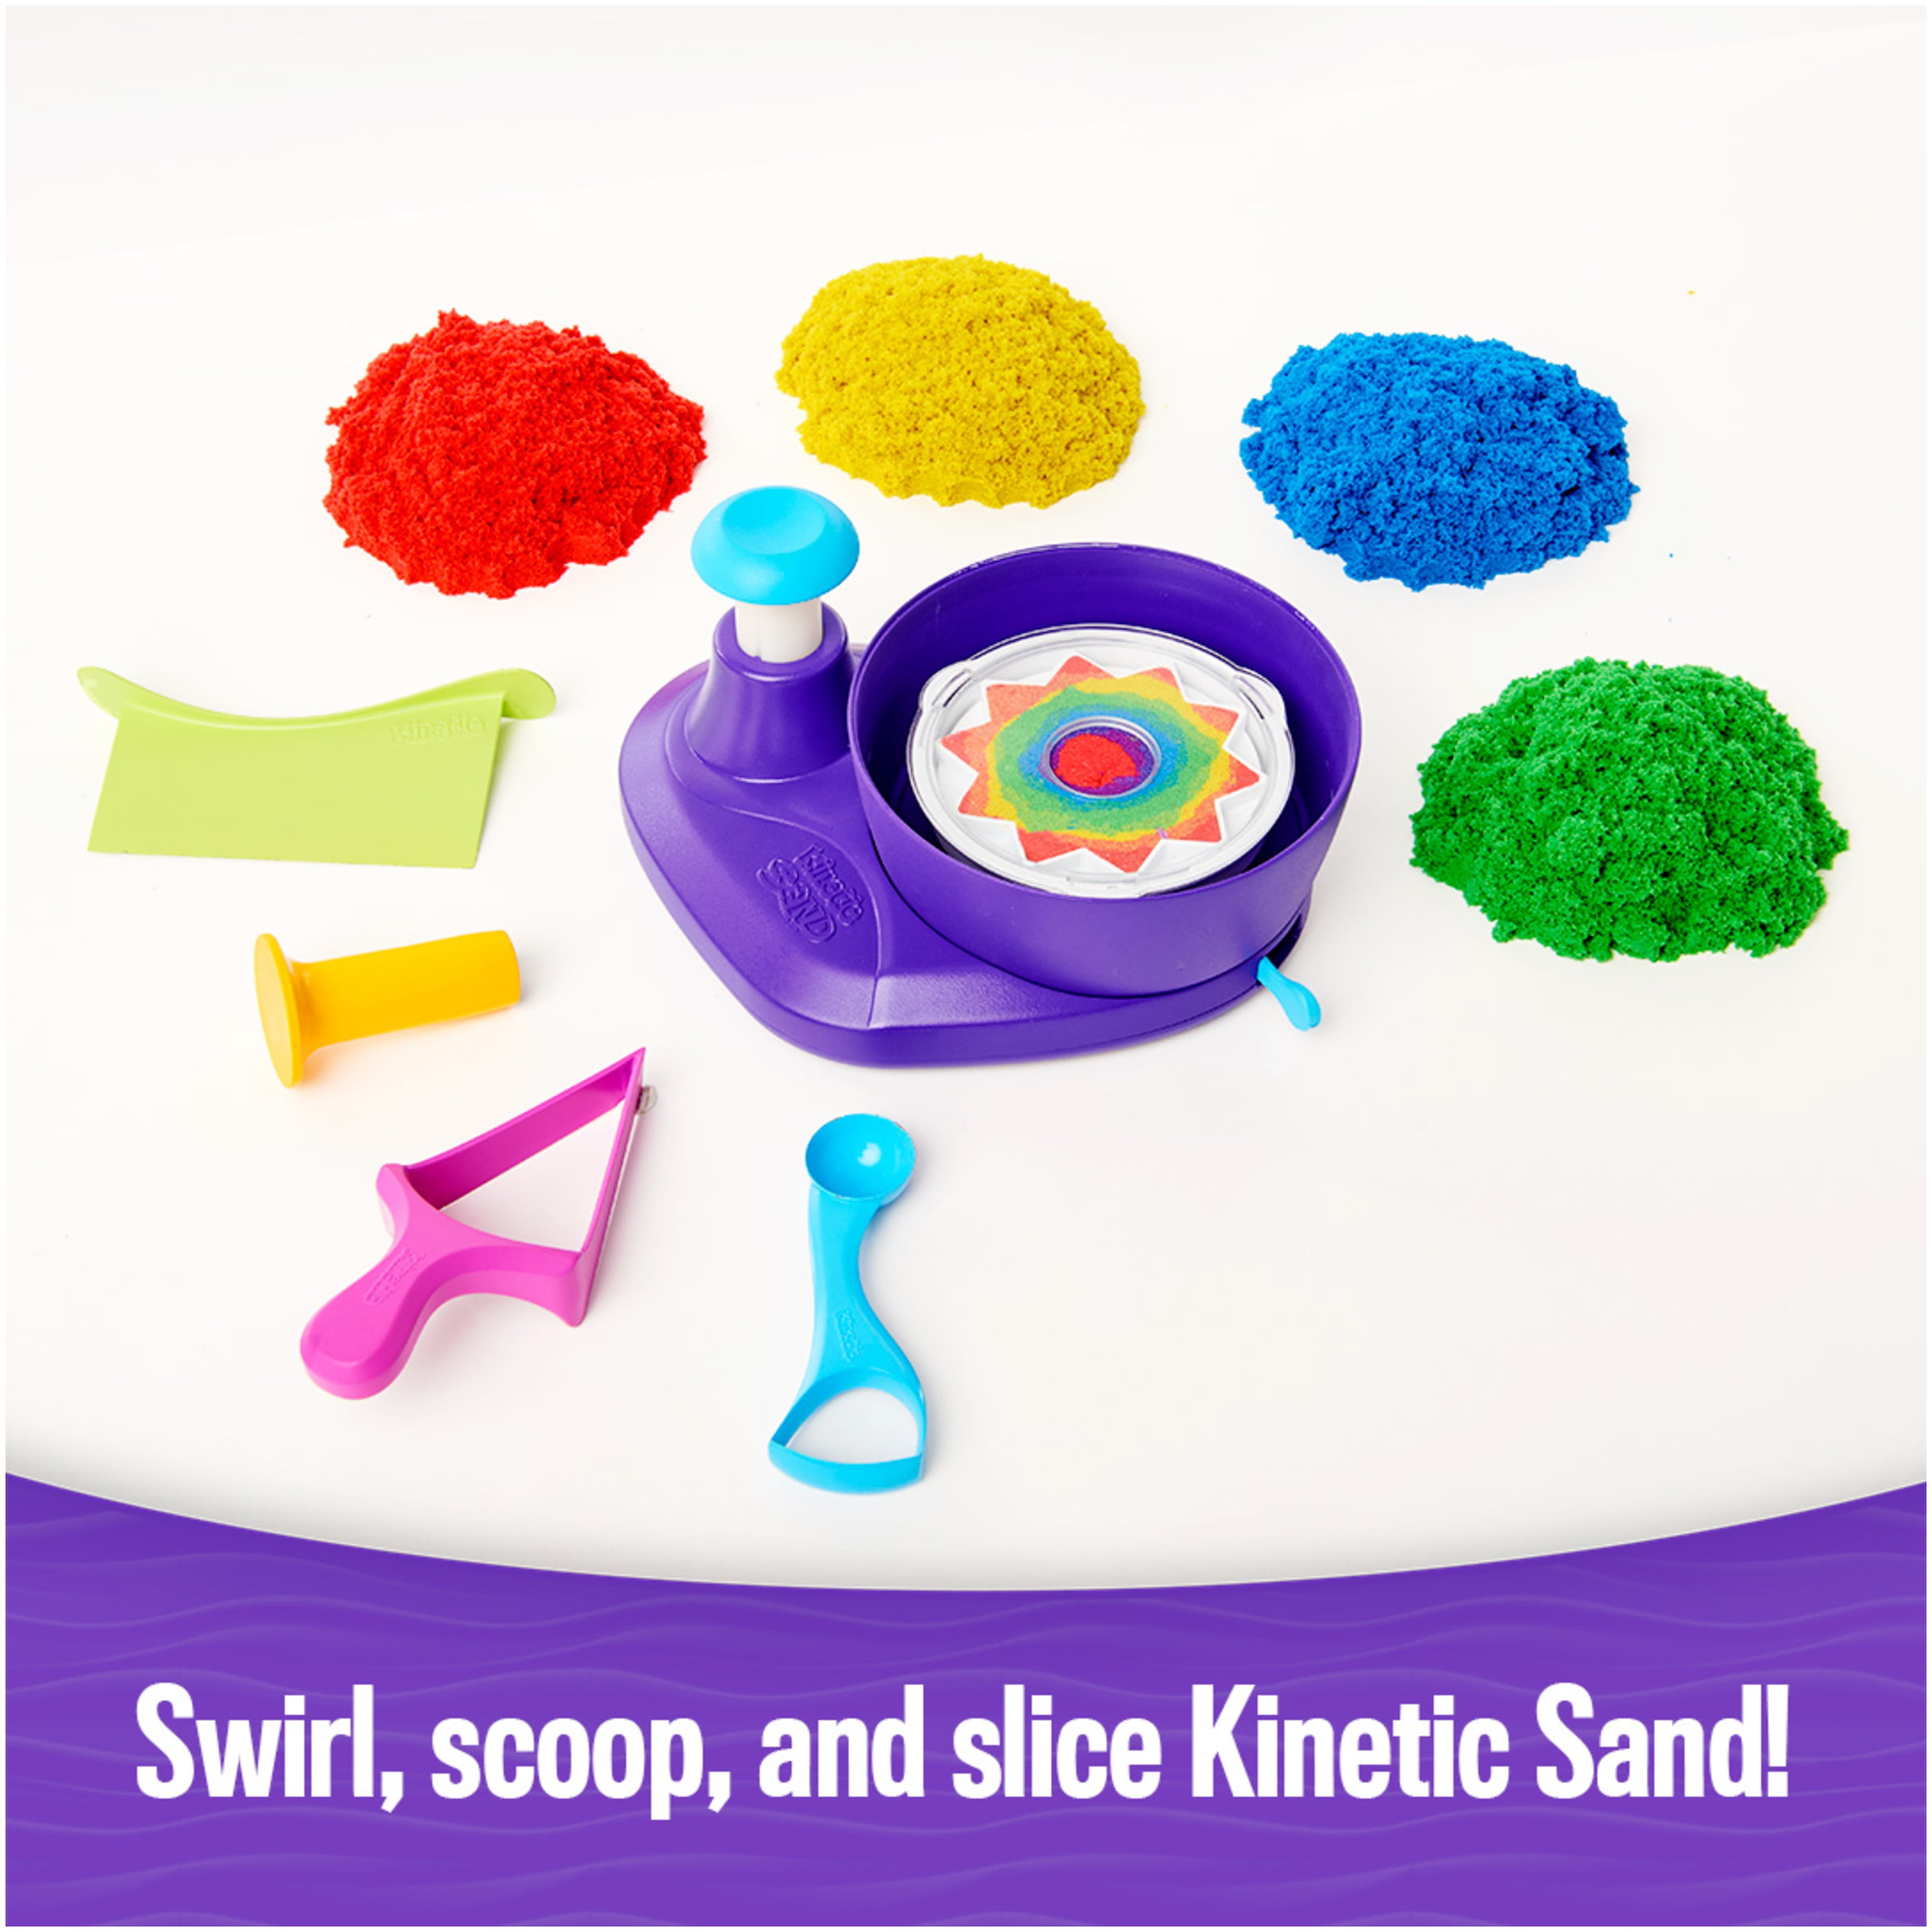 Kinetic Sand - Green (2lbs)